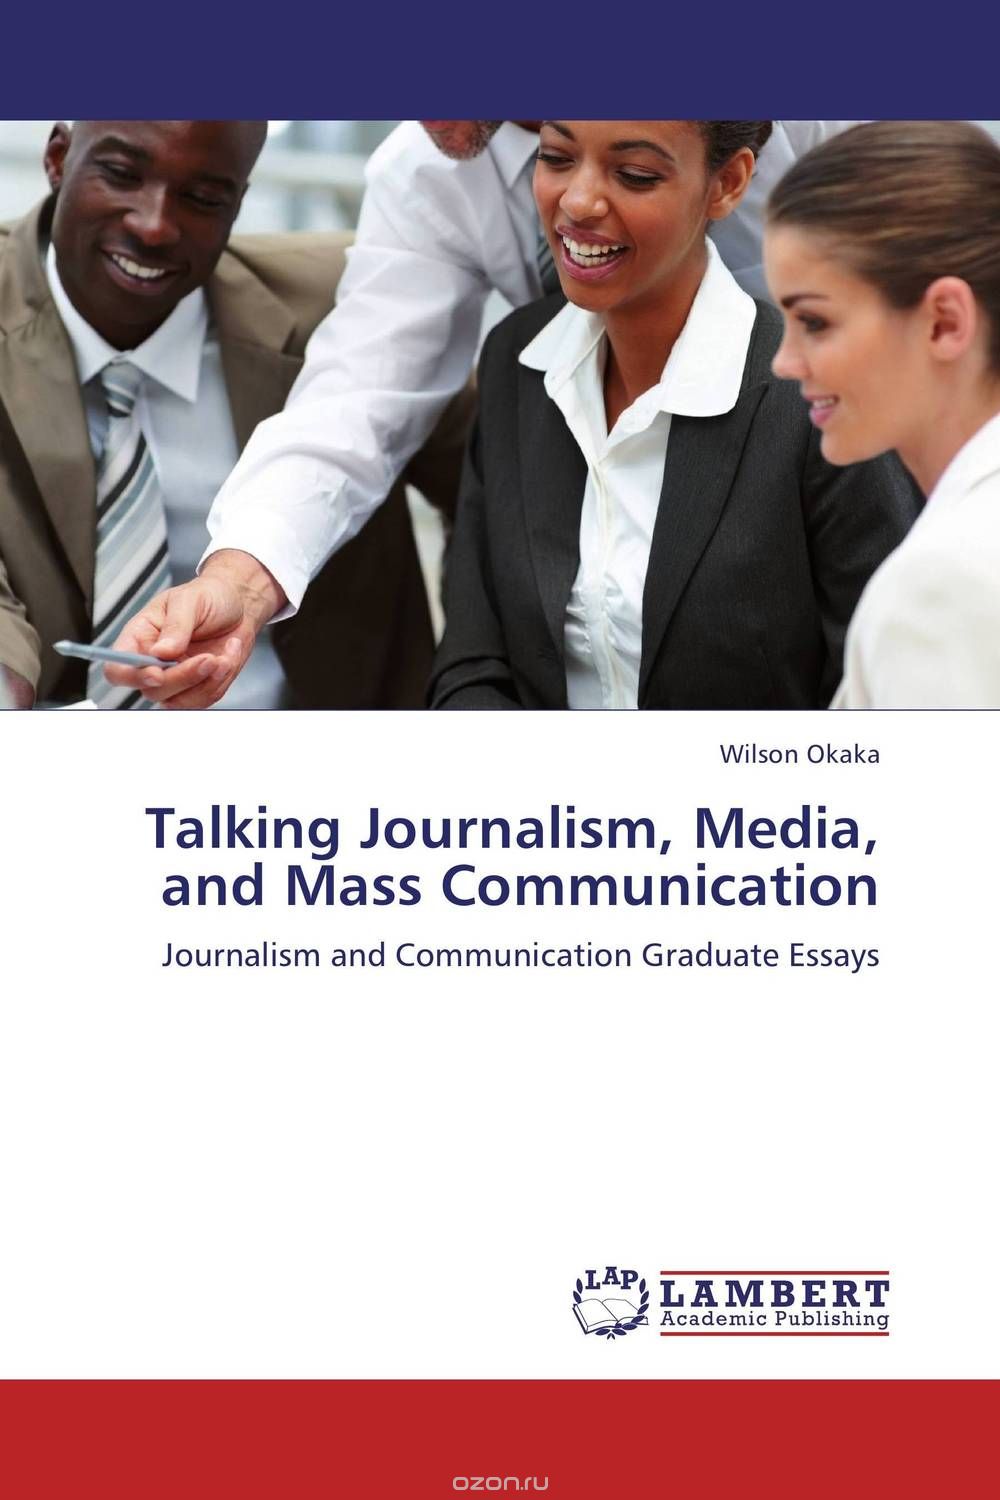 Скачать книгу "Talking Journalism, Media, and Mass Communication"